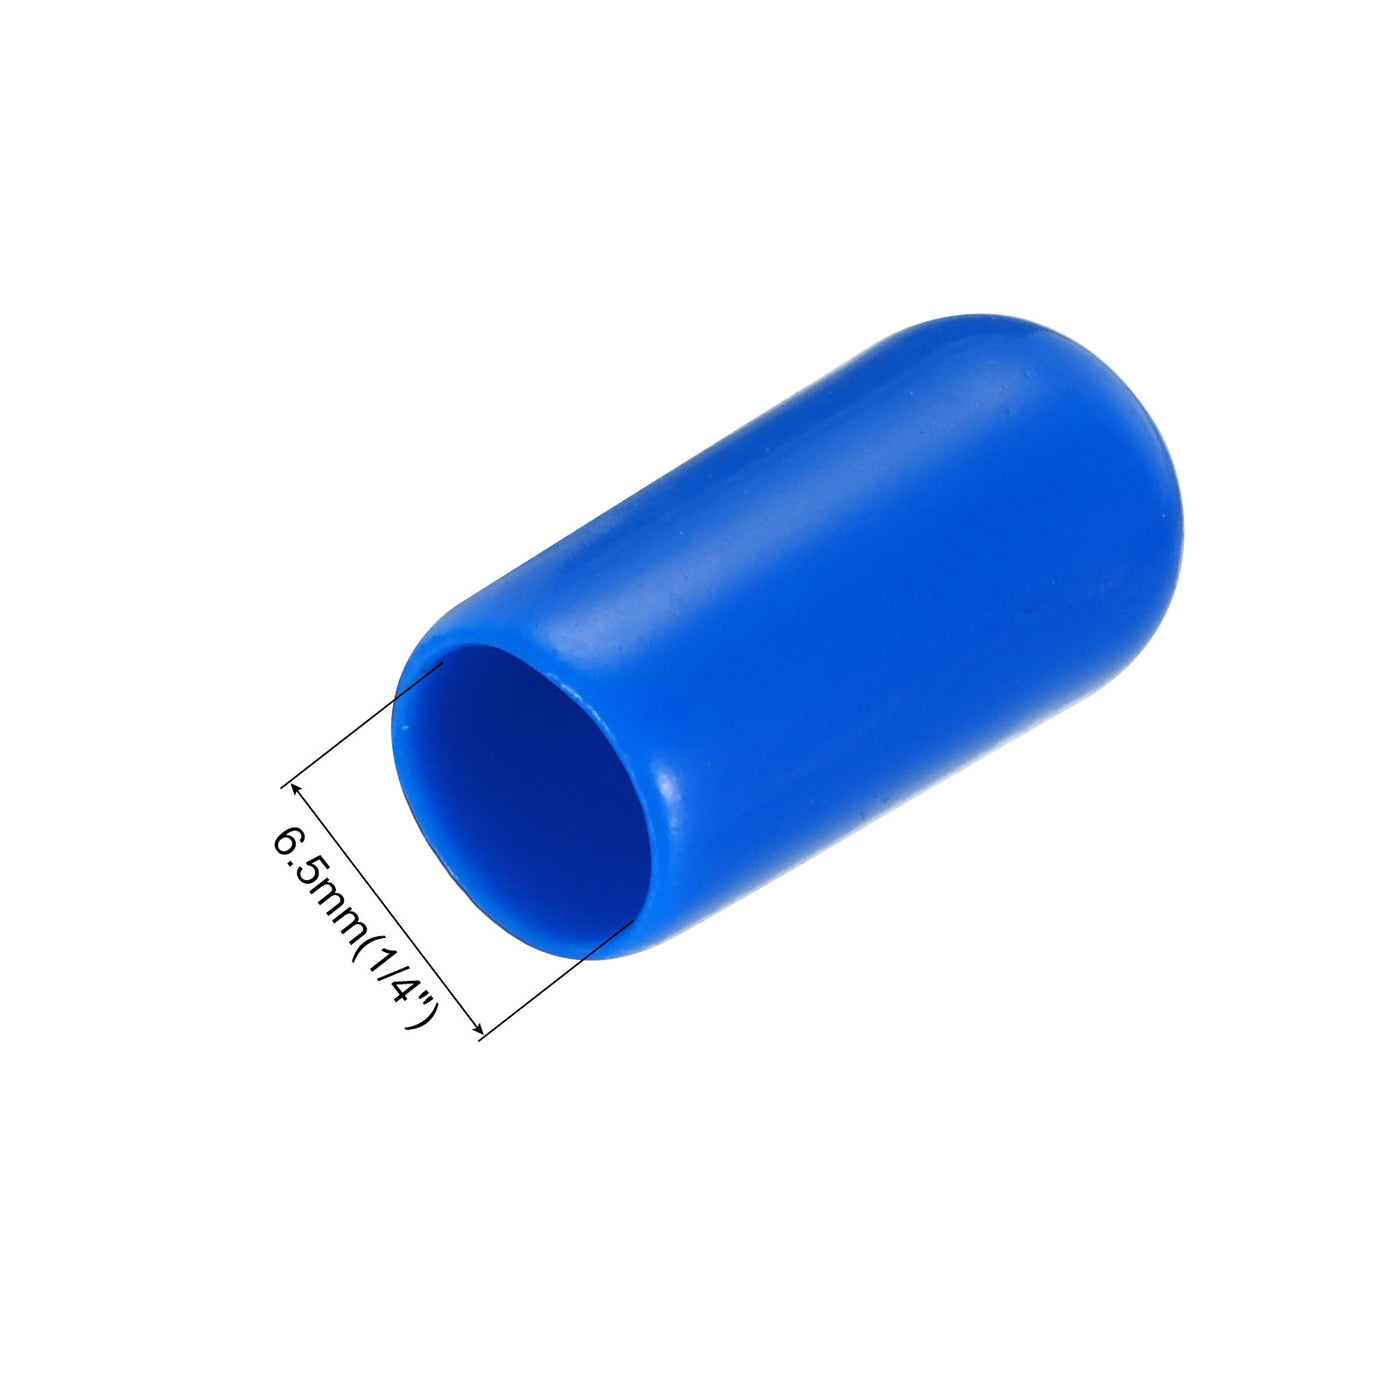 uxcell Uxcell 50pcs Rubber End Caps 6.5mm(1/4") ID Vinyl PVC Round Tube Bolt Cap Cover Screw Thread Protectors Blue